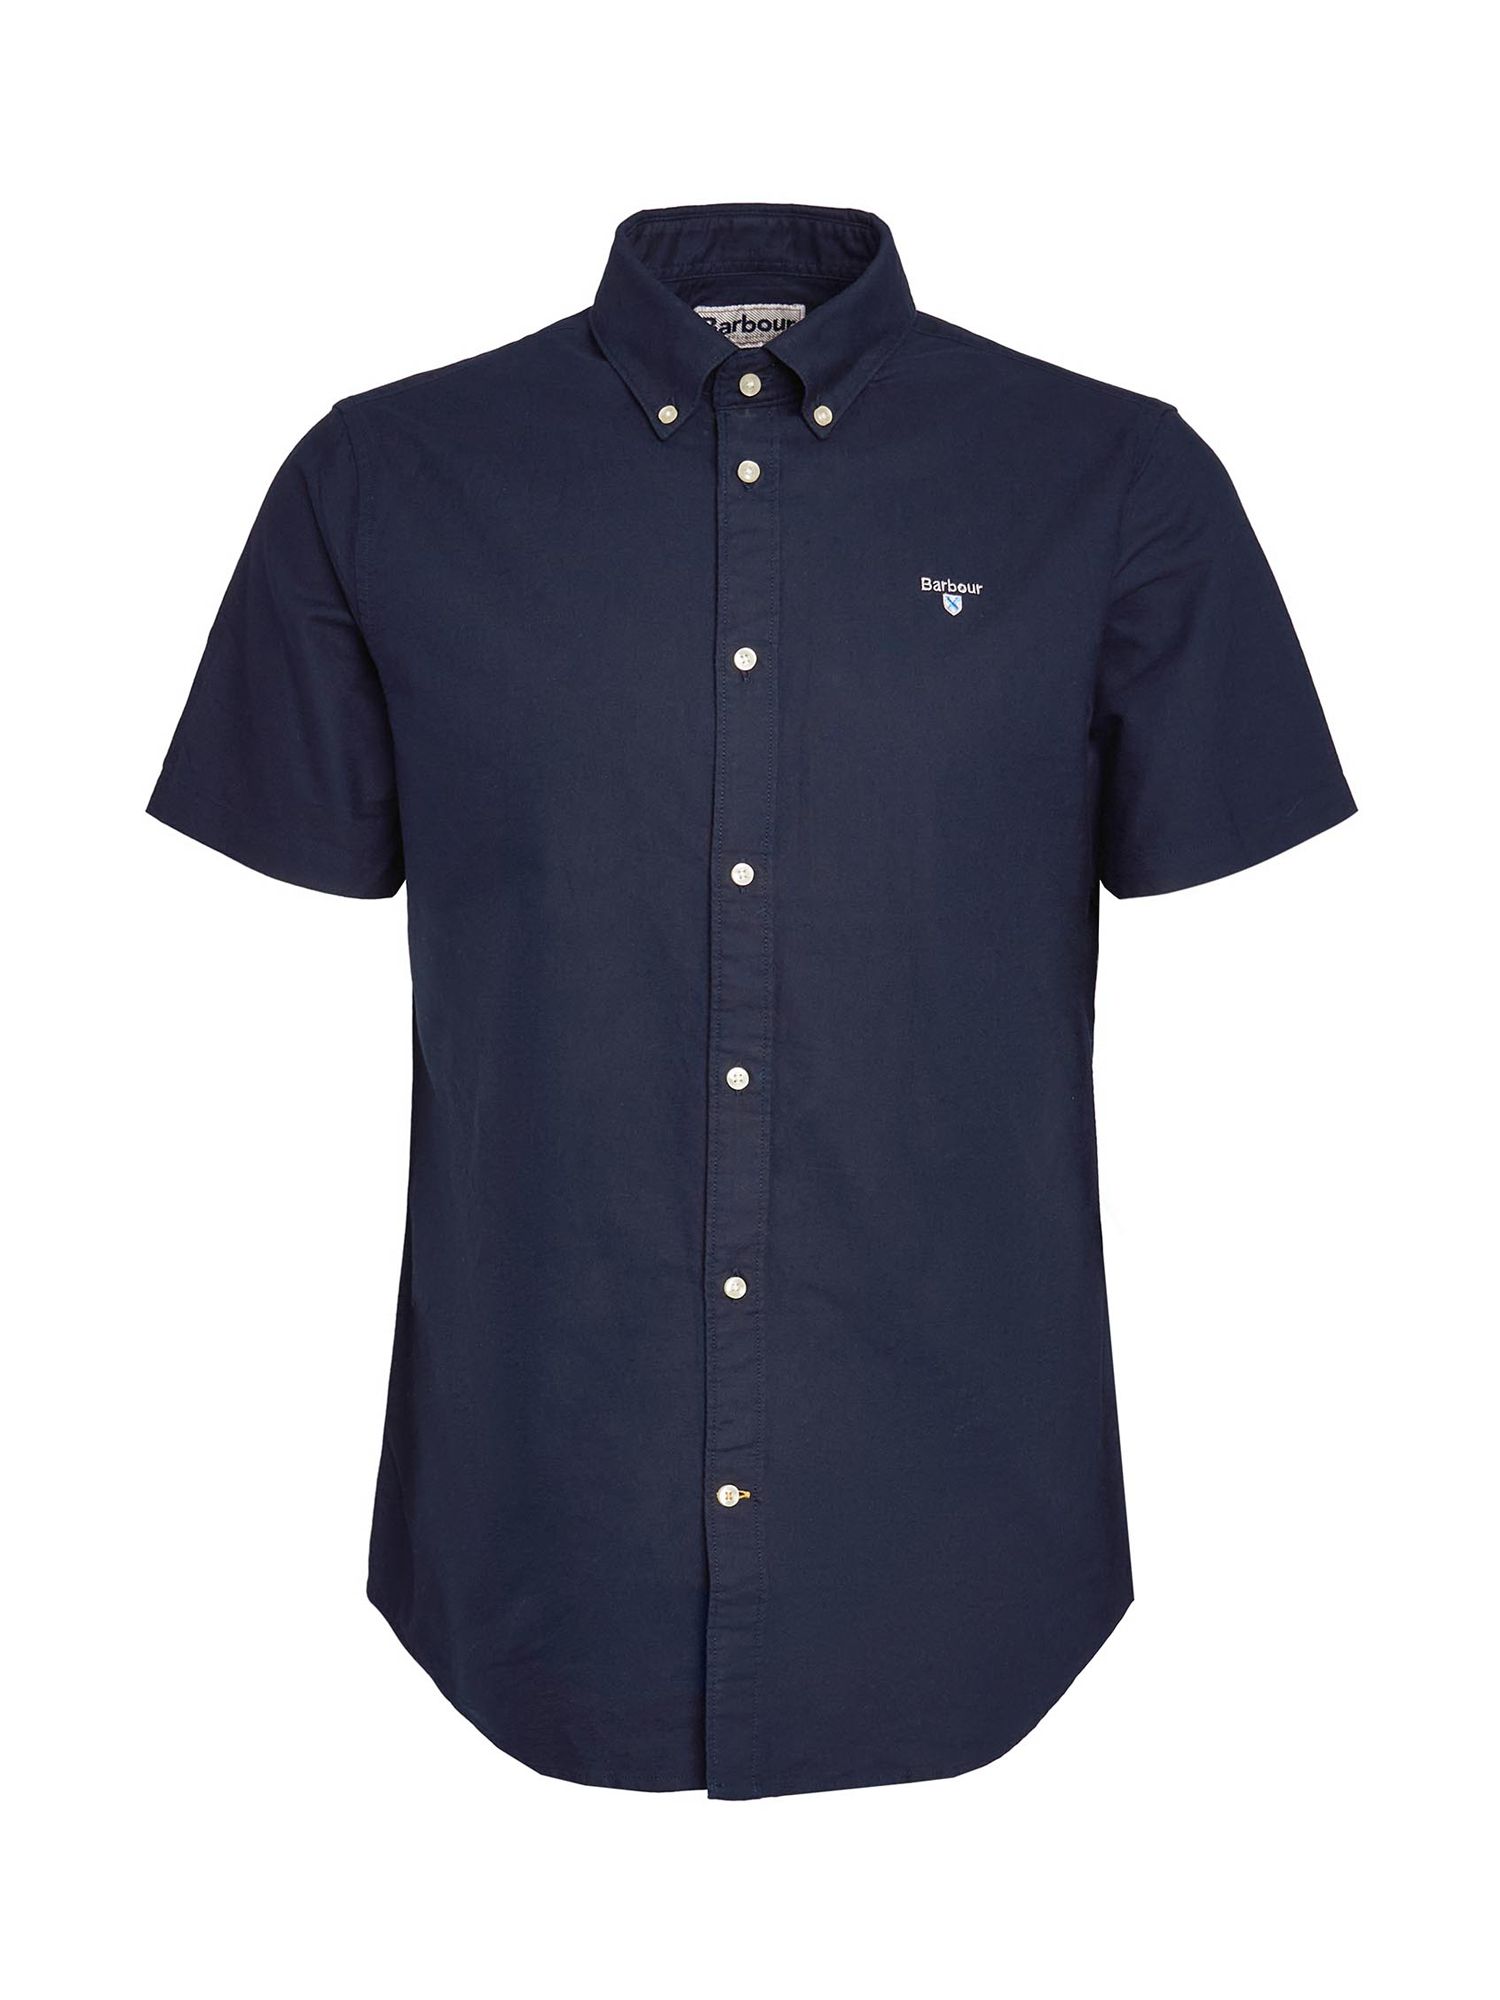 Barbour Oxford Cotton Short Sleeve Shirt, Navy, M